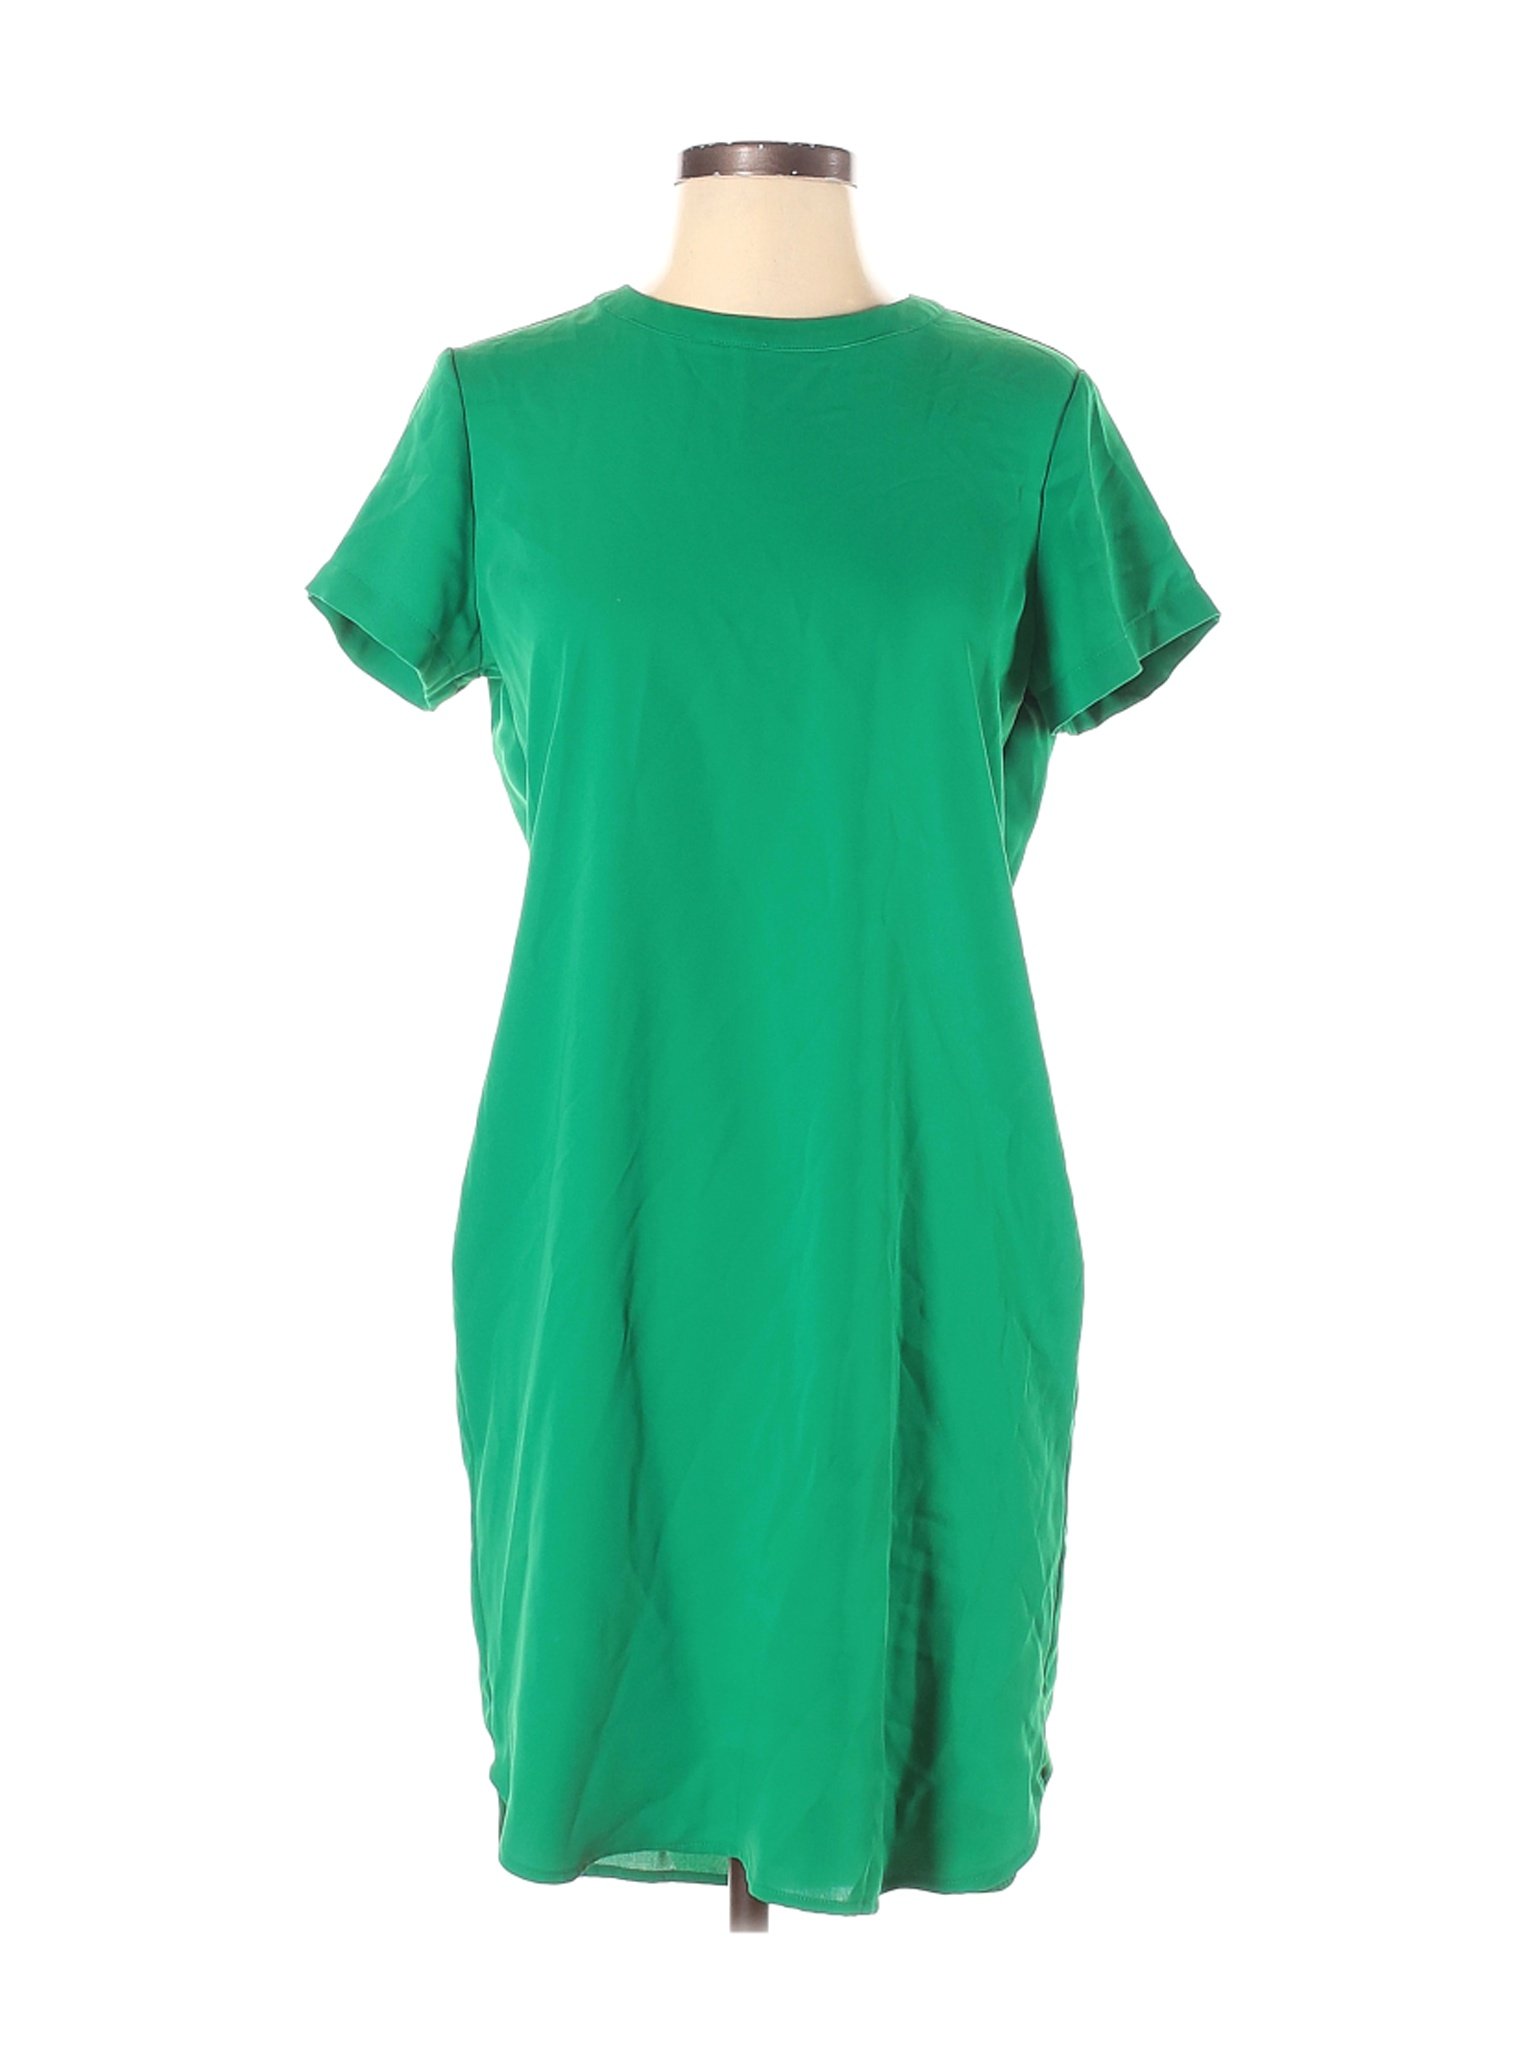 Adrienne Vittadini Women Green Casual Dress 4 | eBay